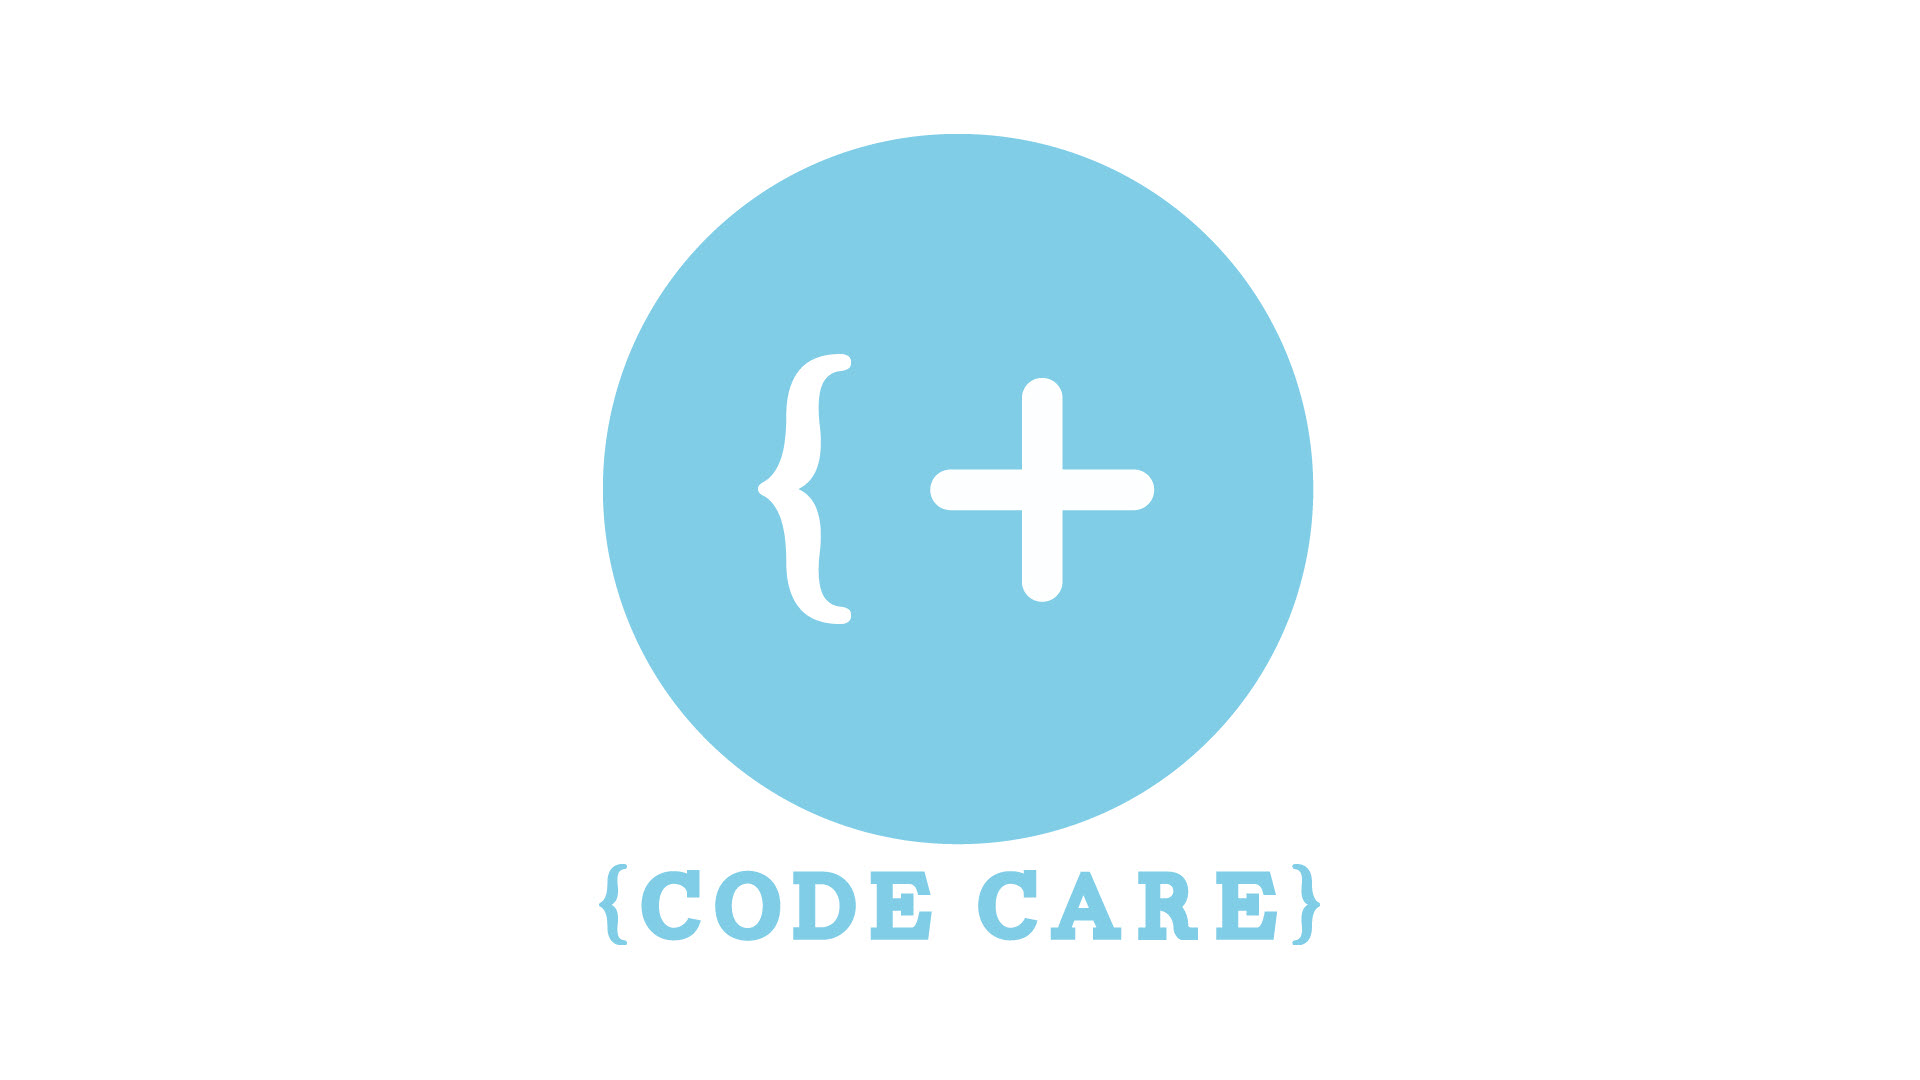 Code Care